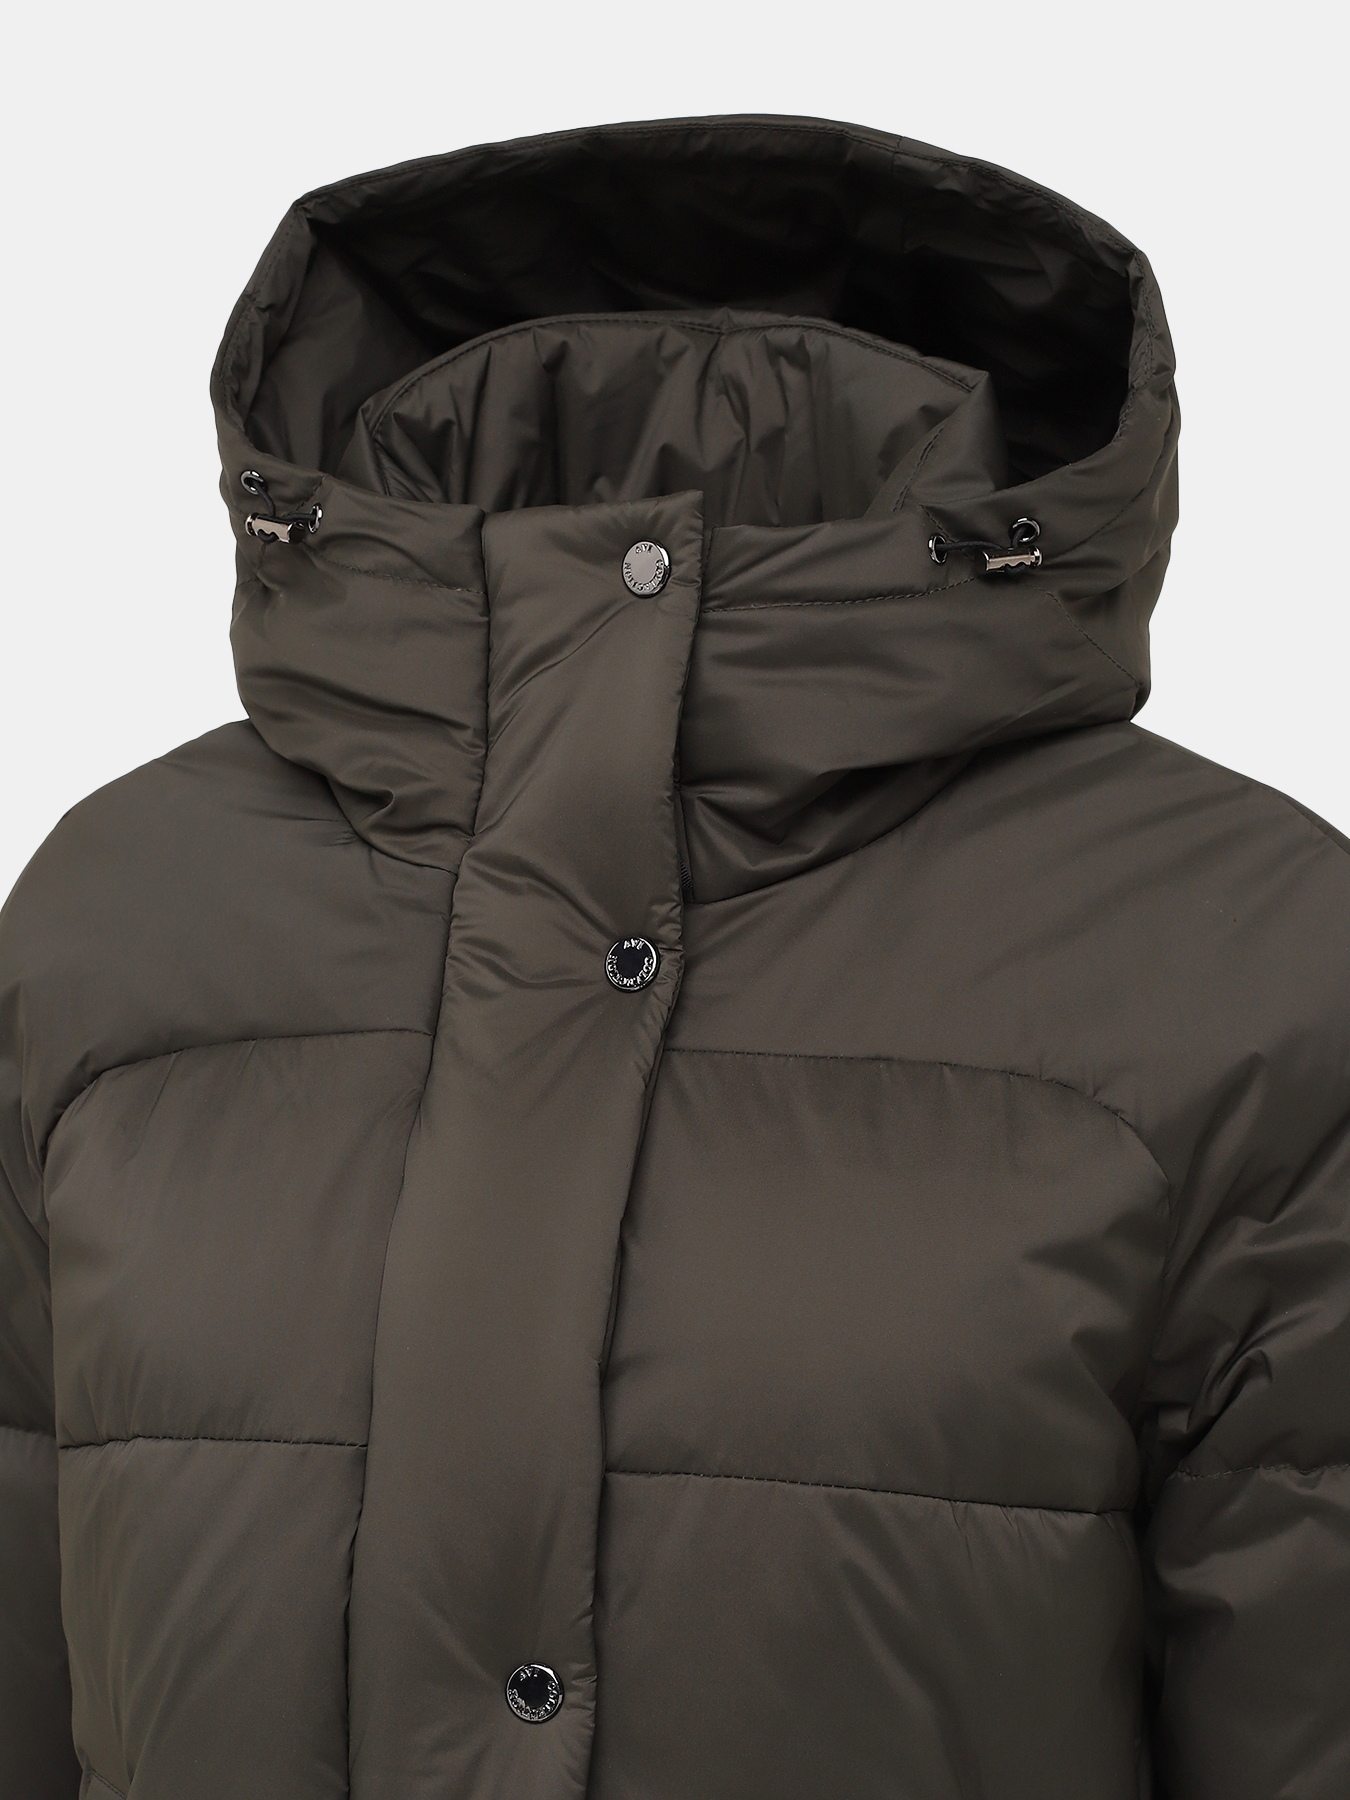 Пальто зимнее AVI 433638-024, цвет хаки, размер 52 - фото 2